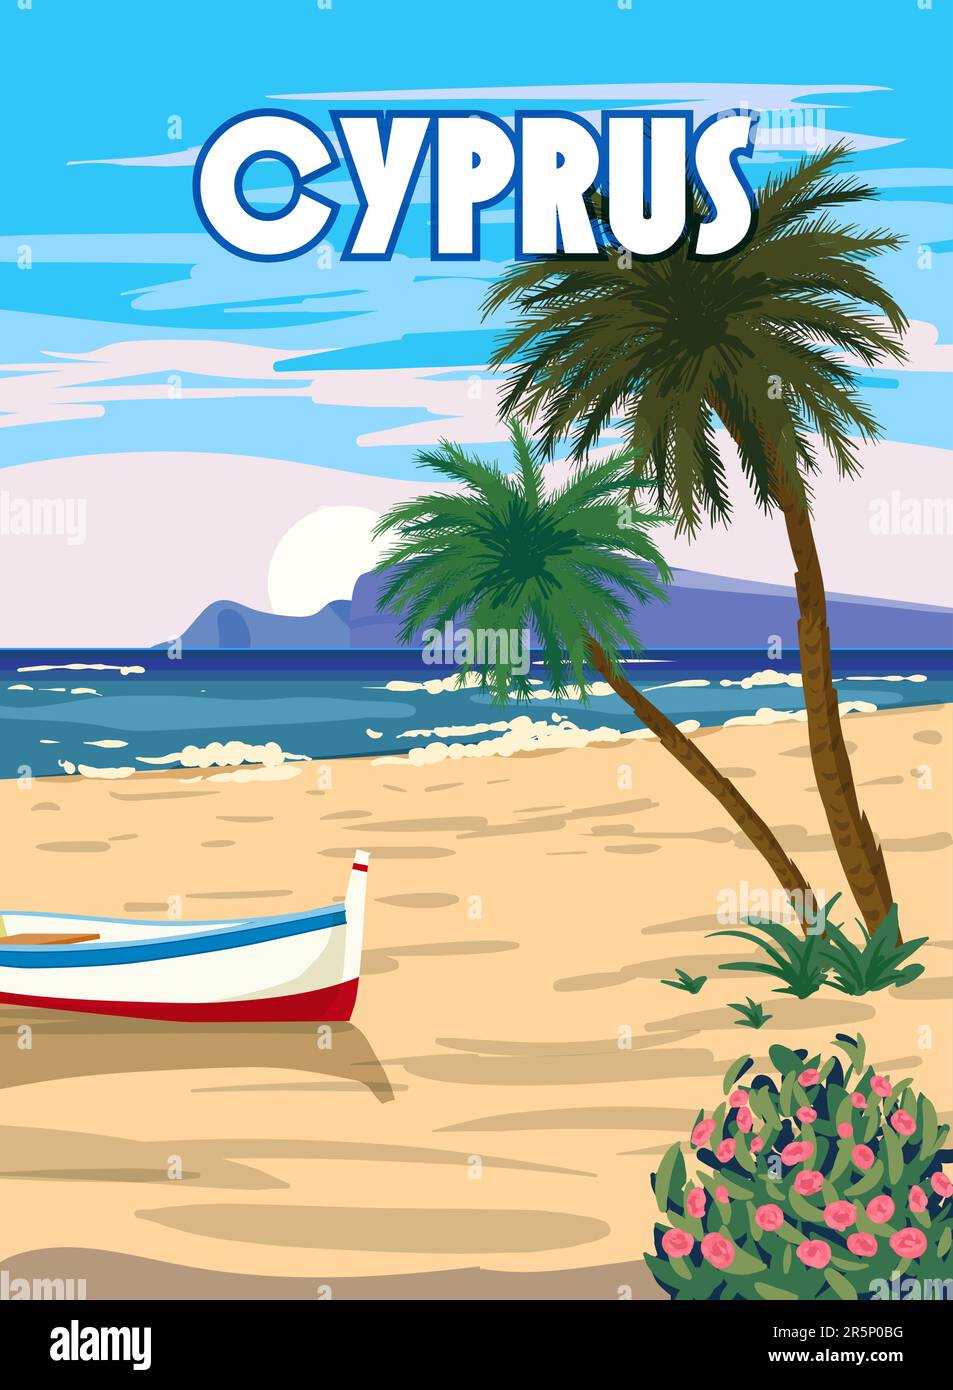 Cyprus Poster Travel, Greek seascape, beach, palms, boat, poster, Mediterranean landscape. Vintage style Stock Vector